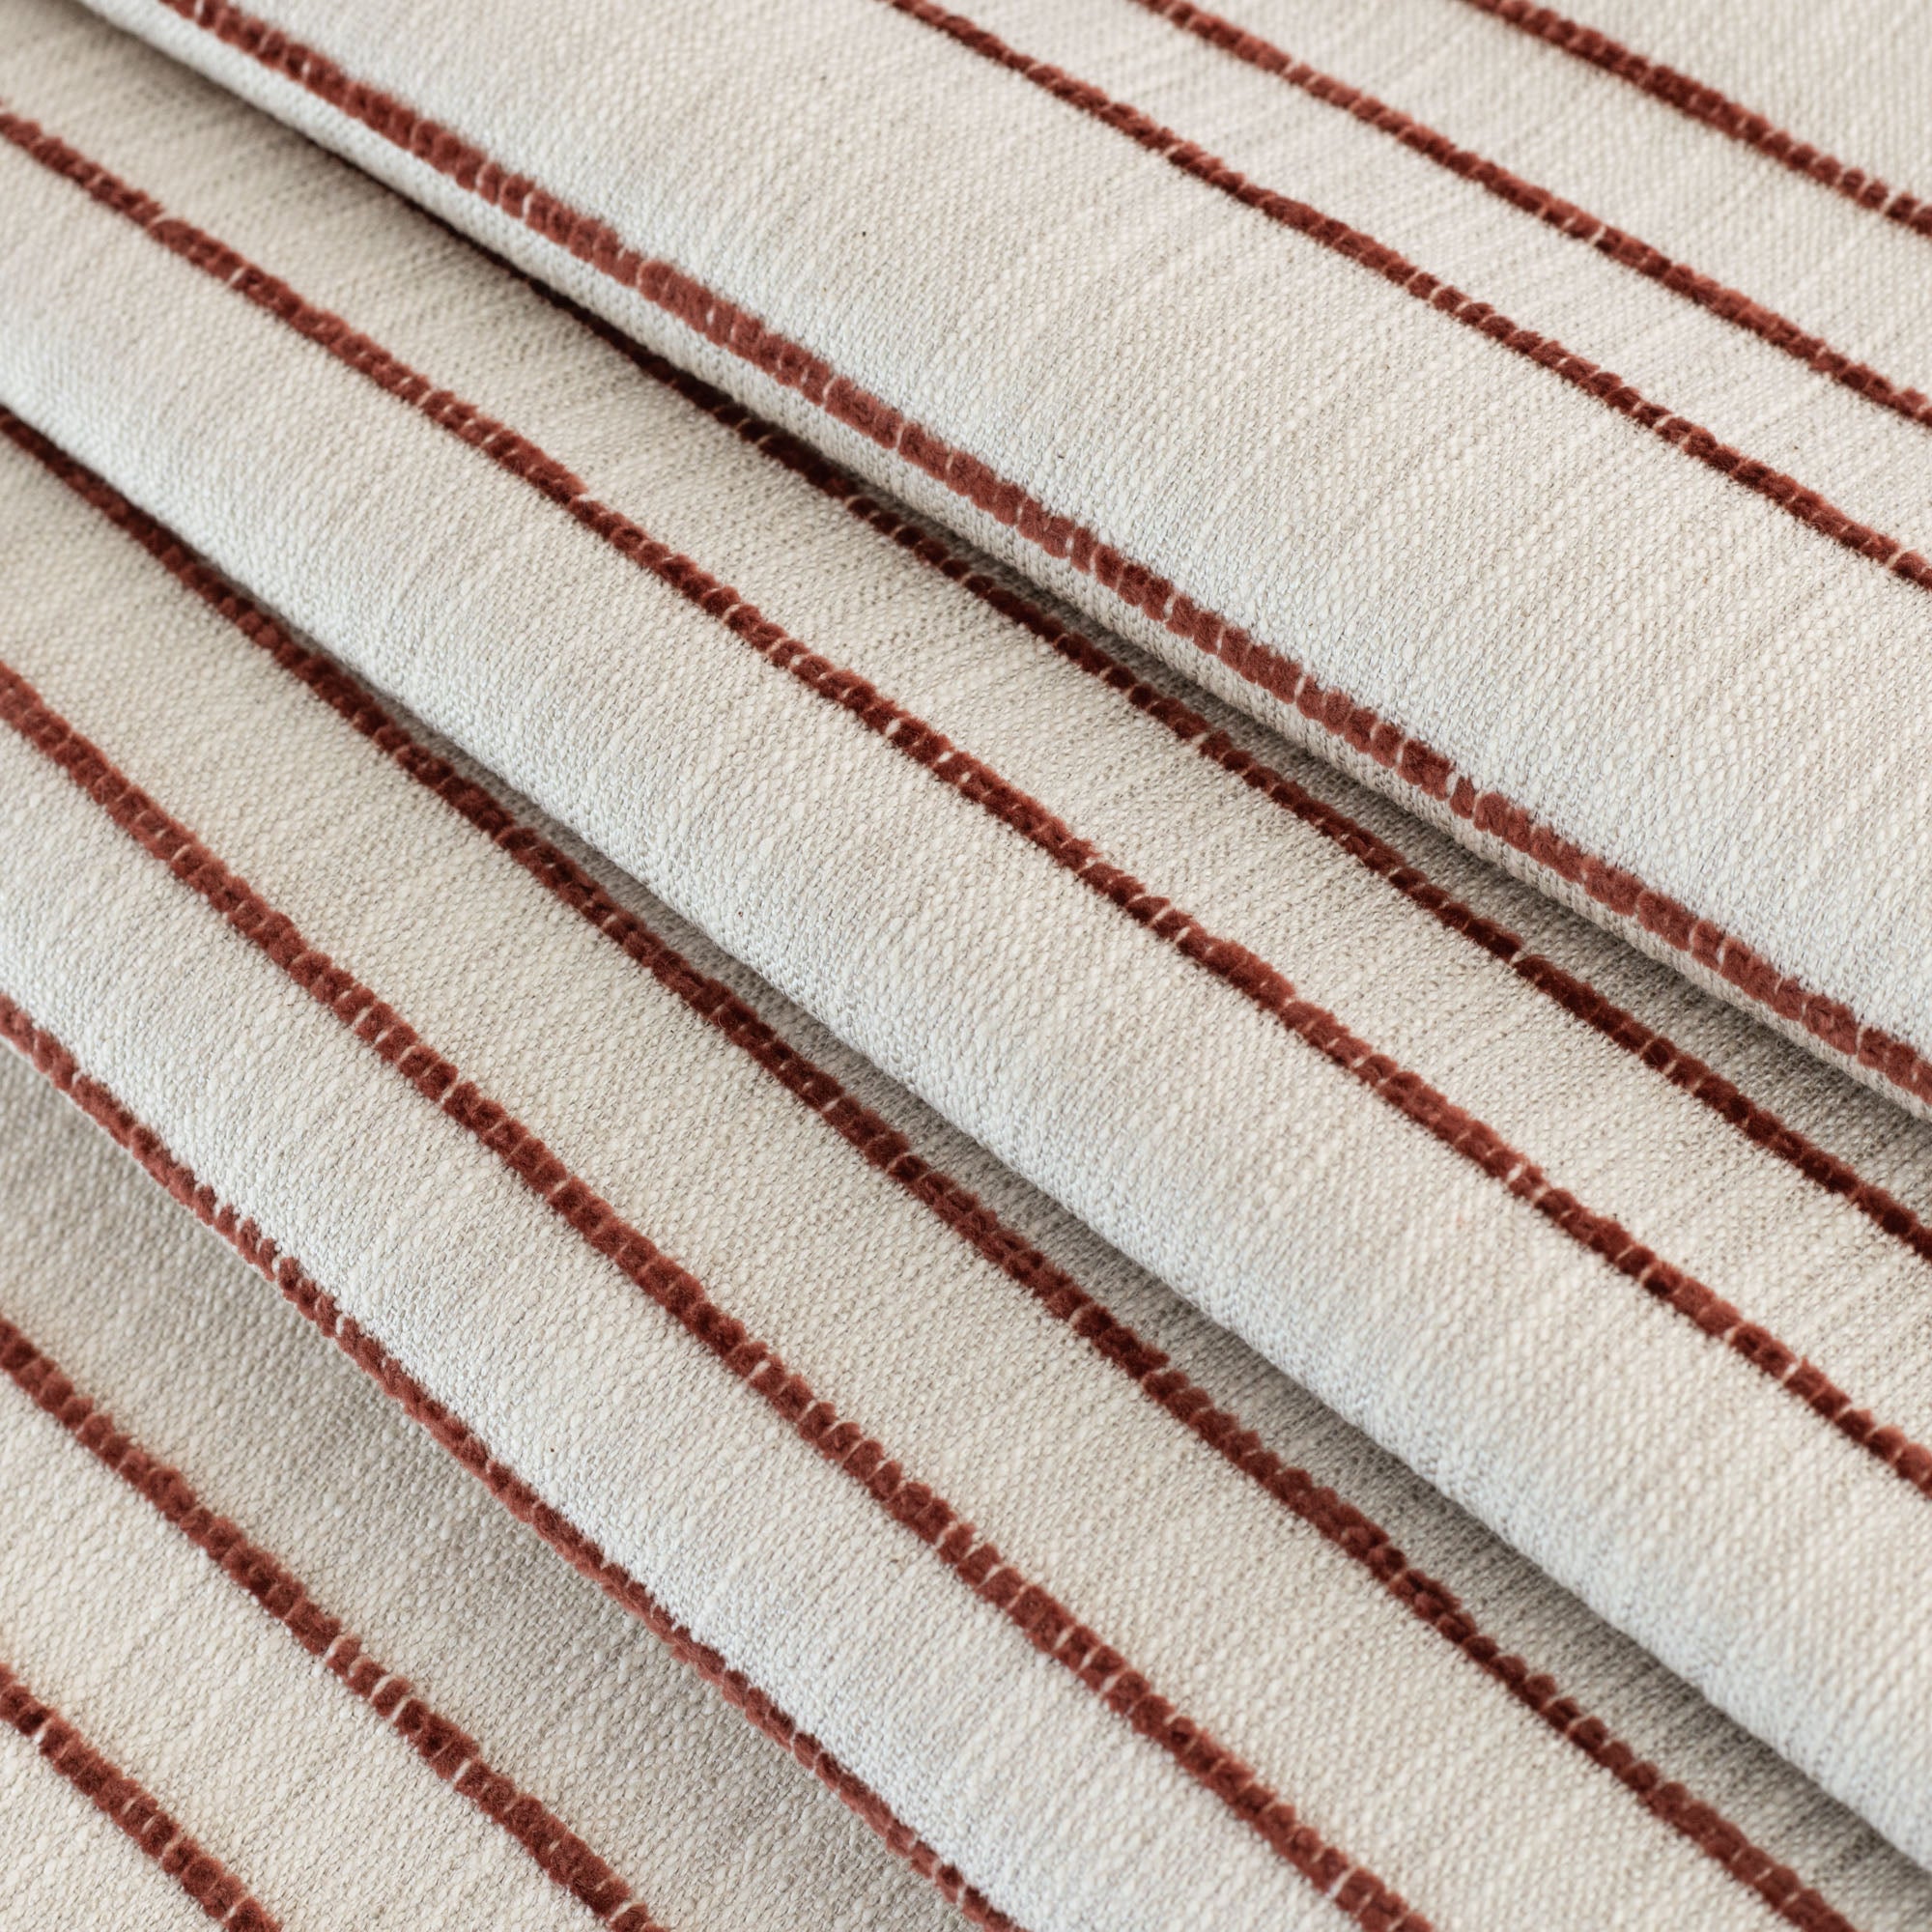 Spar Stripe Fabric, Russet : a rusty red horizontal stripe home decor fabric : view 4